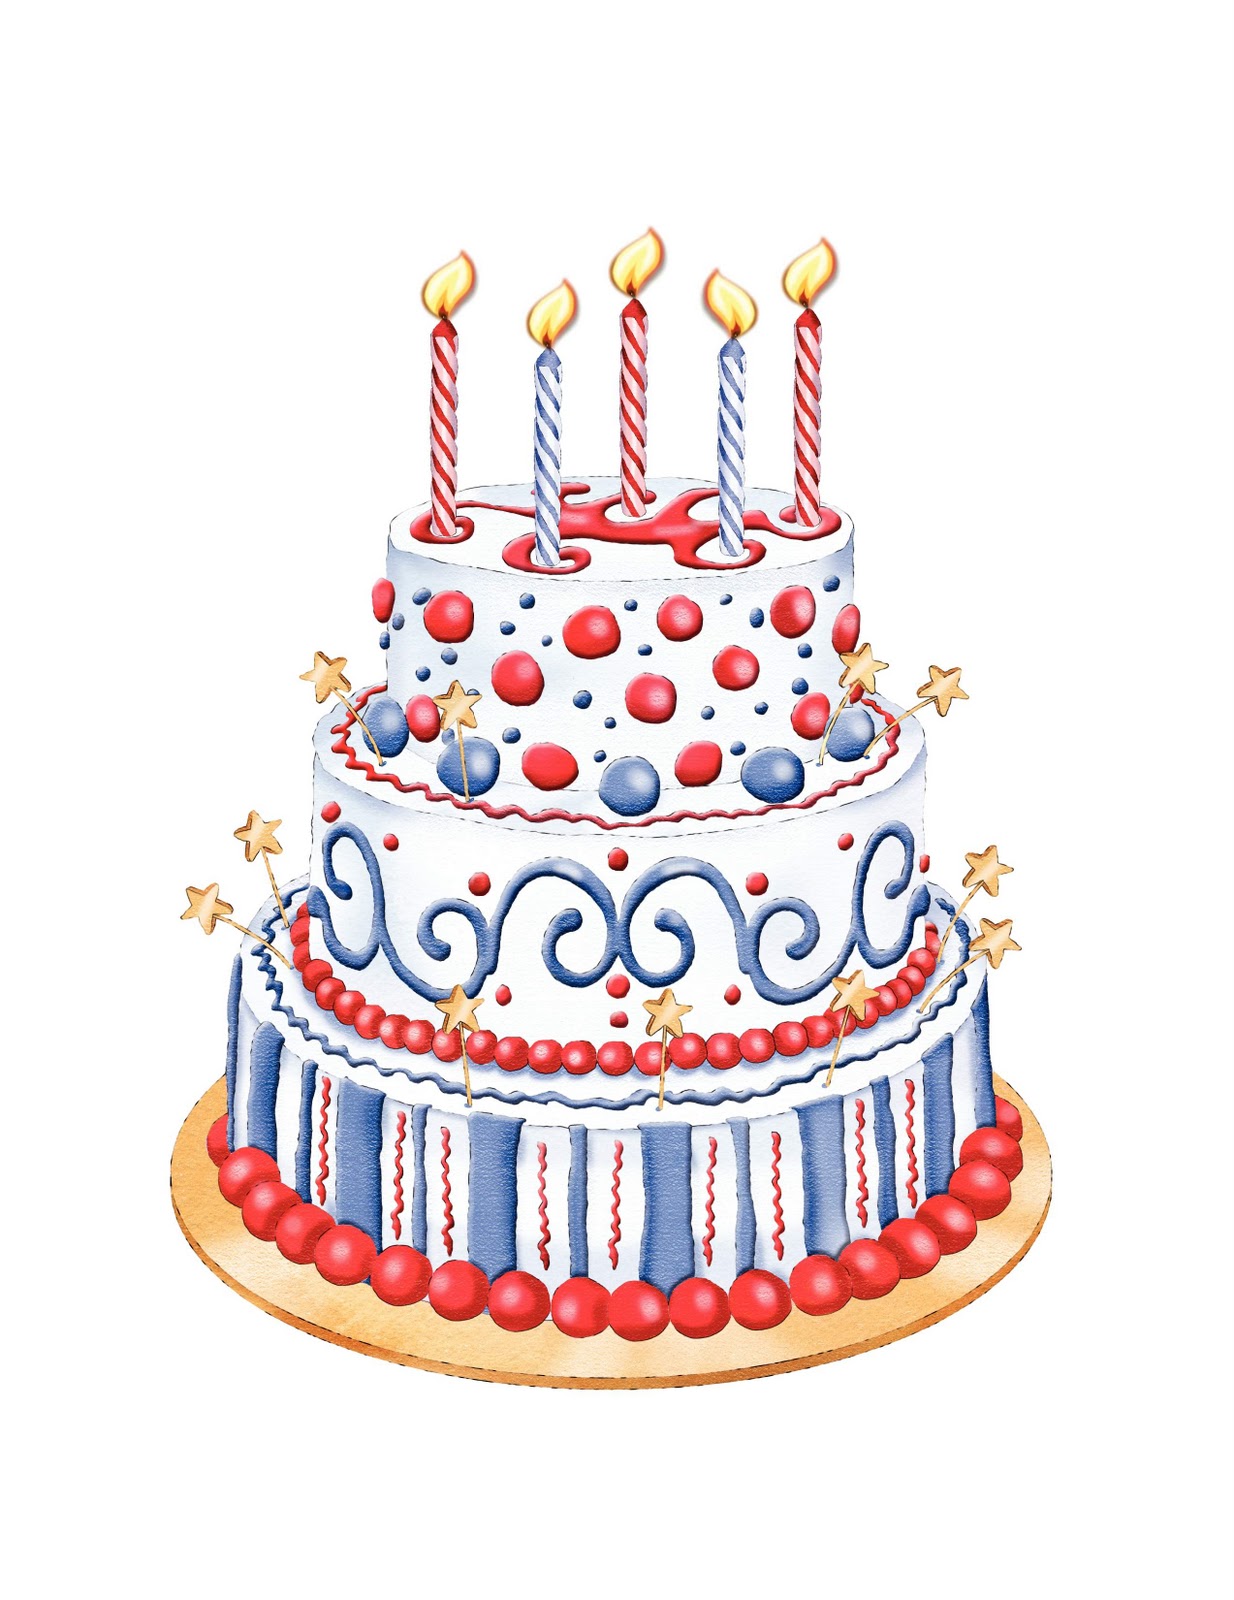 Free Birthday Cake Png Images, Download Free Birthday Cake Png Images ...